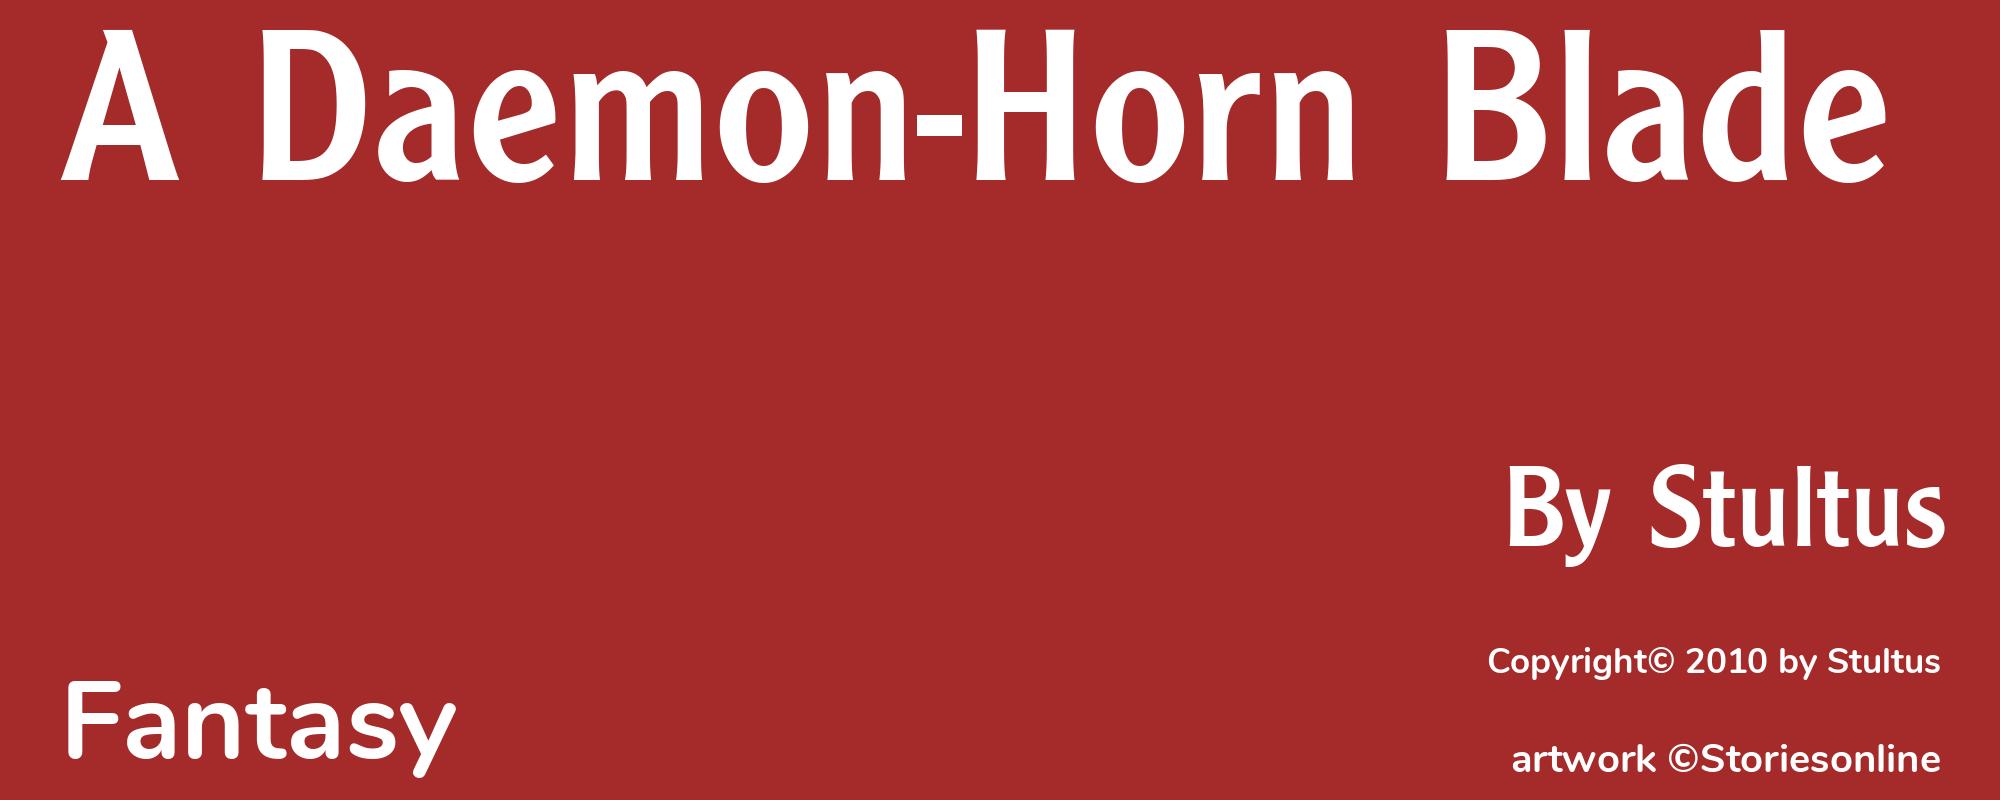 A Daemon-Horn Blade - Cover